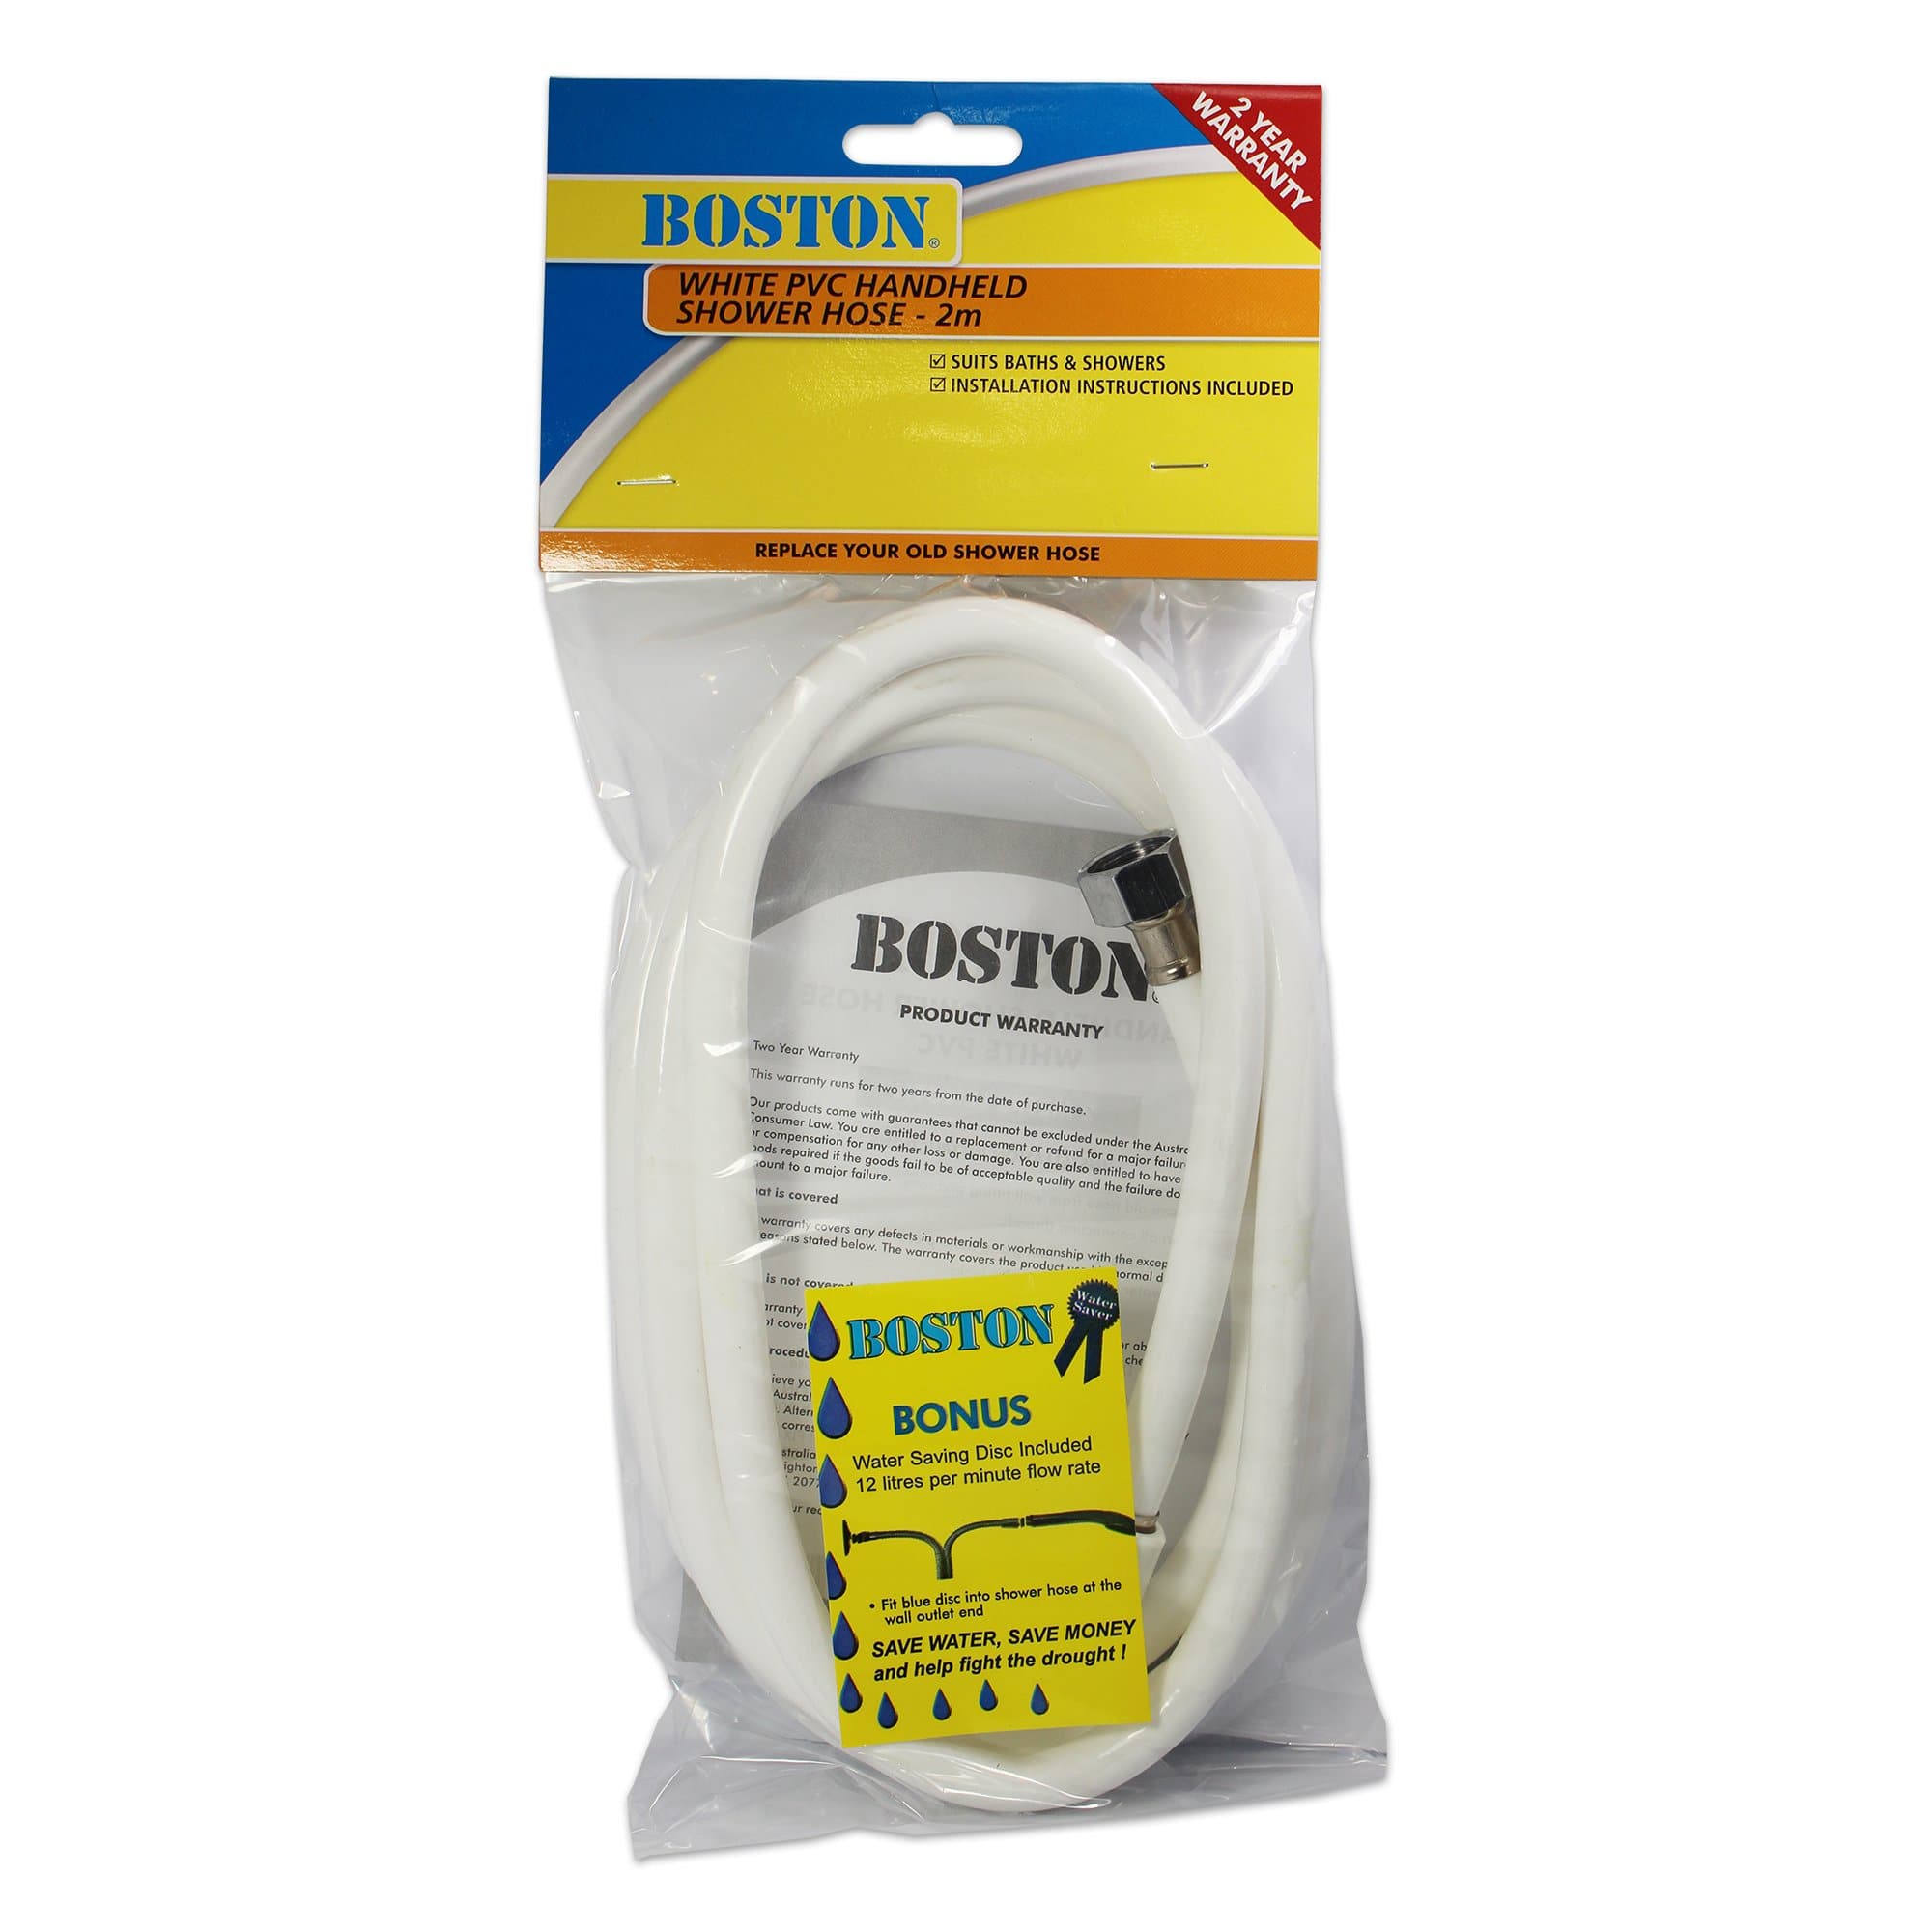 BOSTON 2M Flexible Hand Held Shower Hose White 219619 - Double Bay Hardware